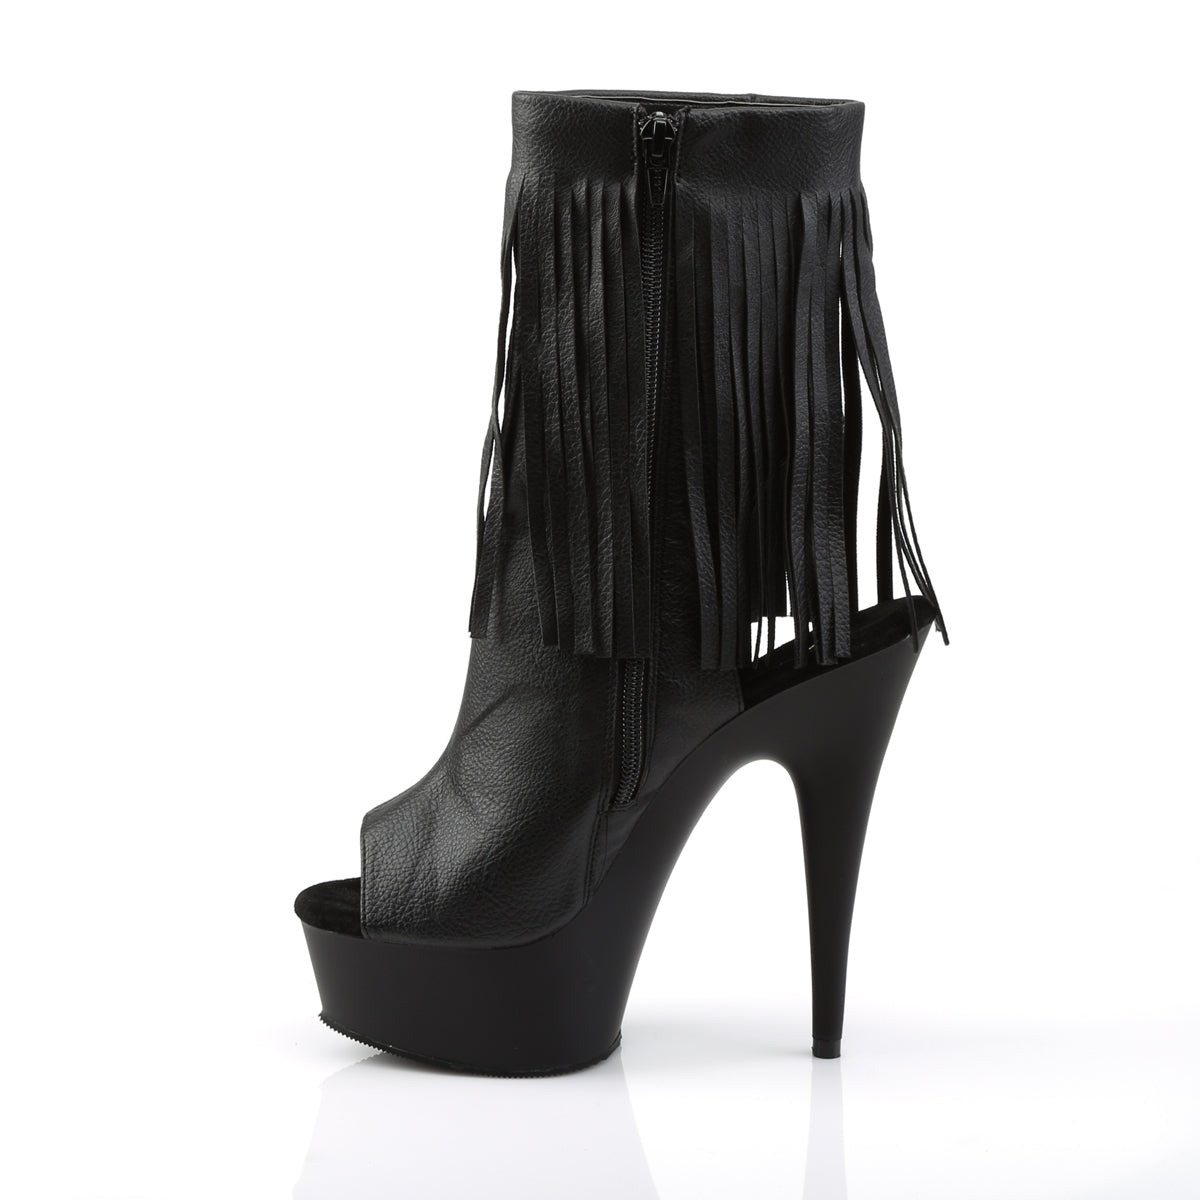 DELIGHT-1019 Pleaser 6 Inch Heel Black Pole Dancer Platforms-Pleaser- Sexy Shoes Pole Dance Heels